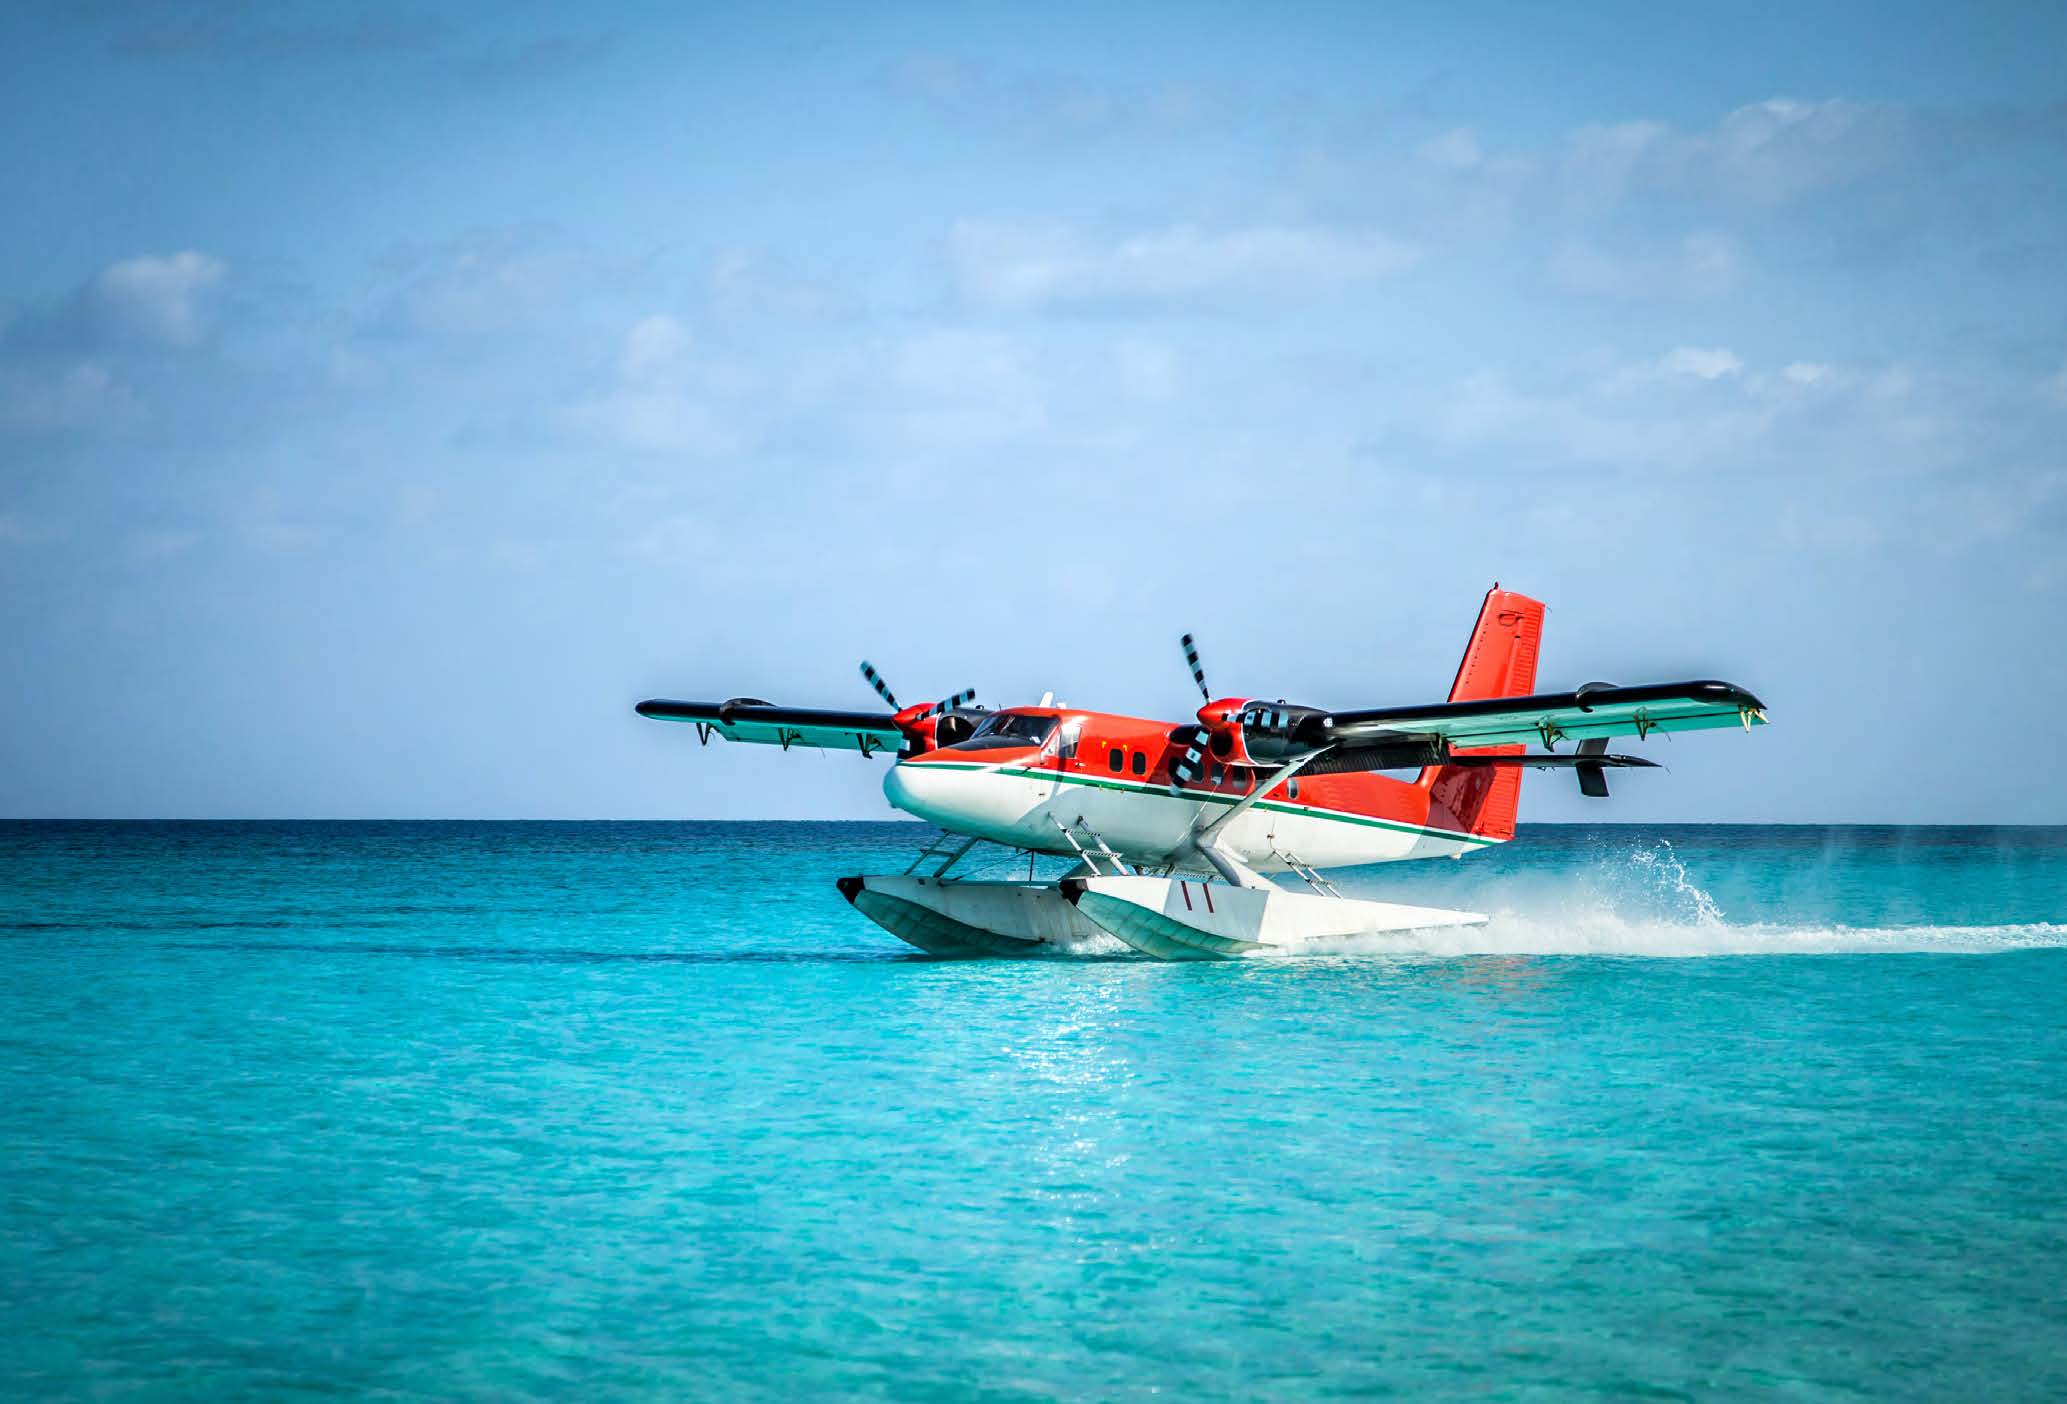 Seaplane landing in the ocean lagoon